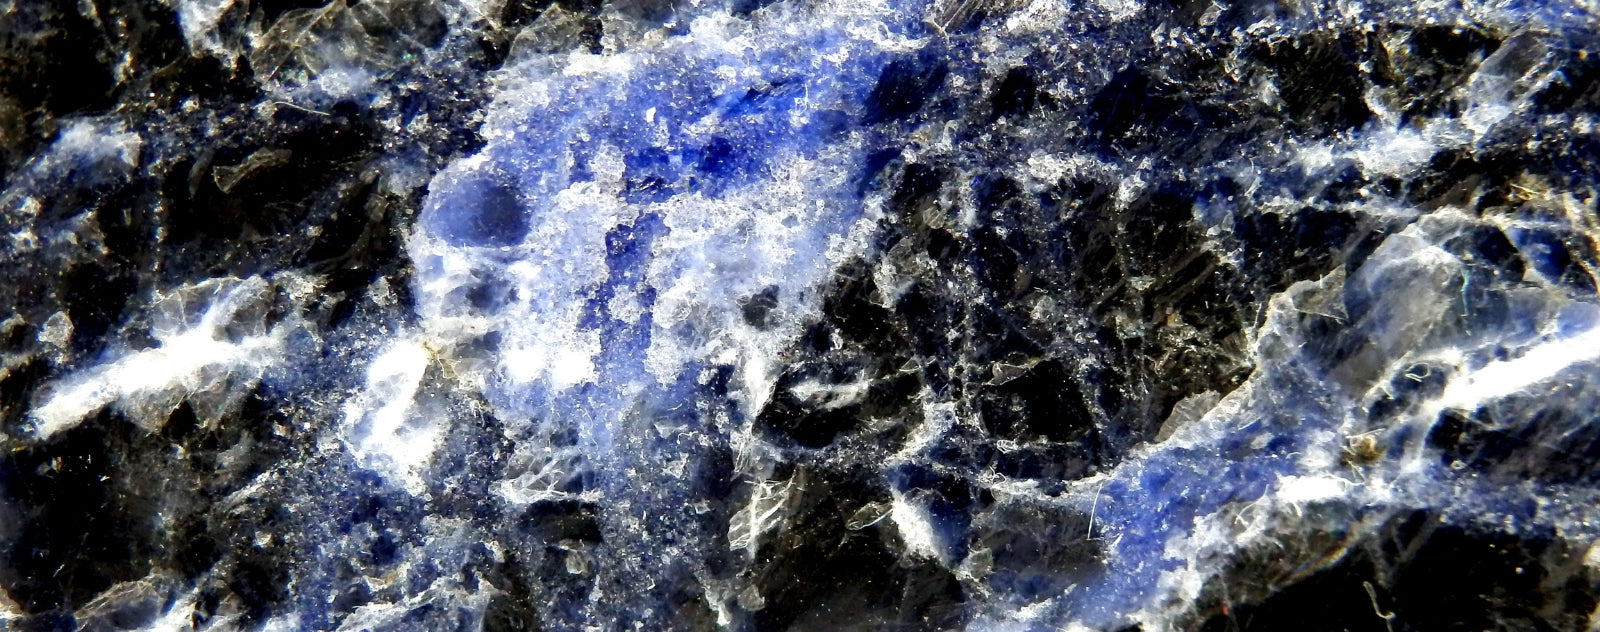 lazulite vu de près